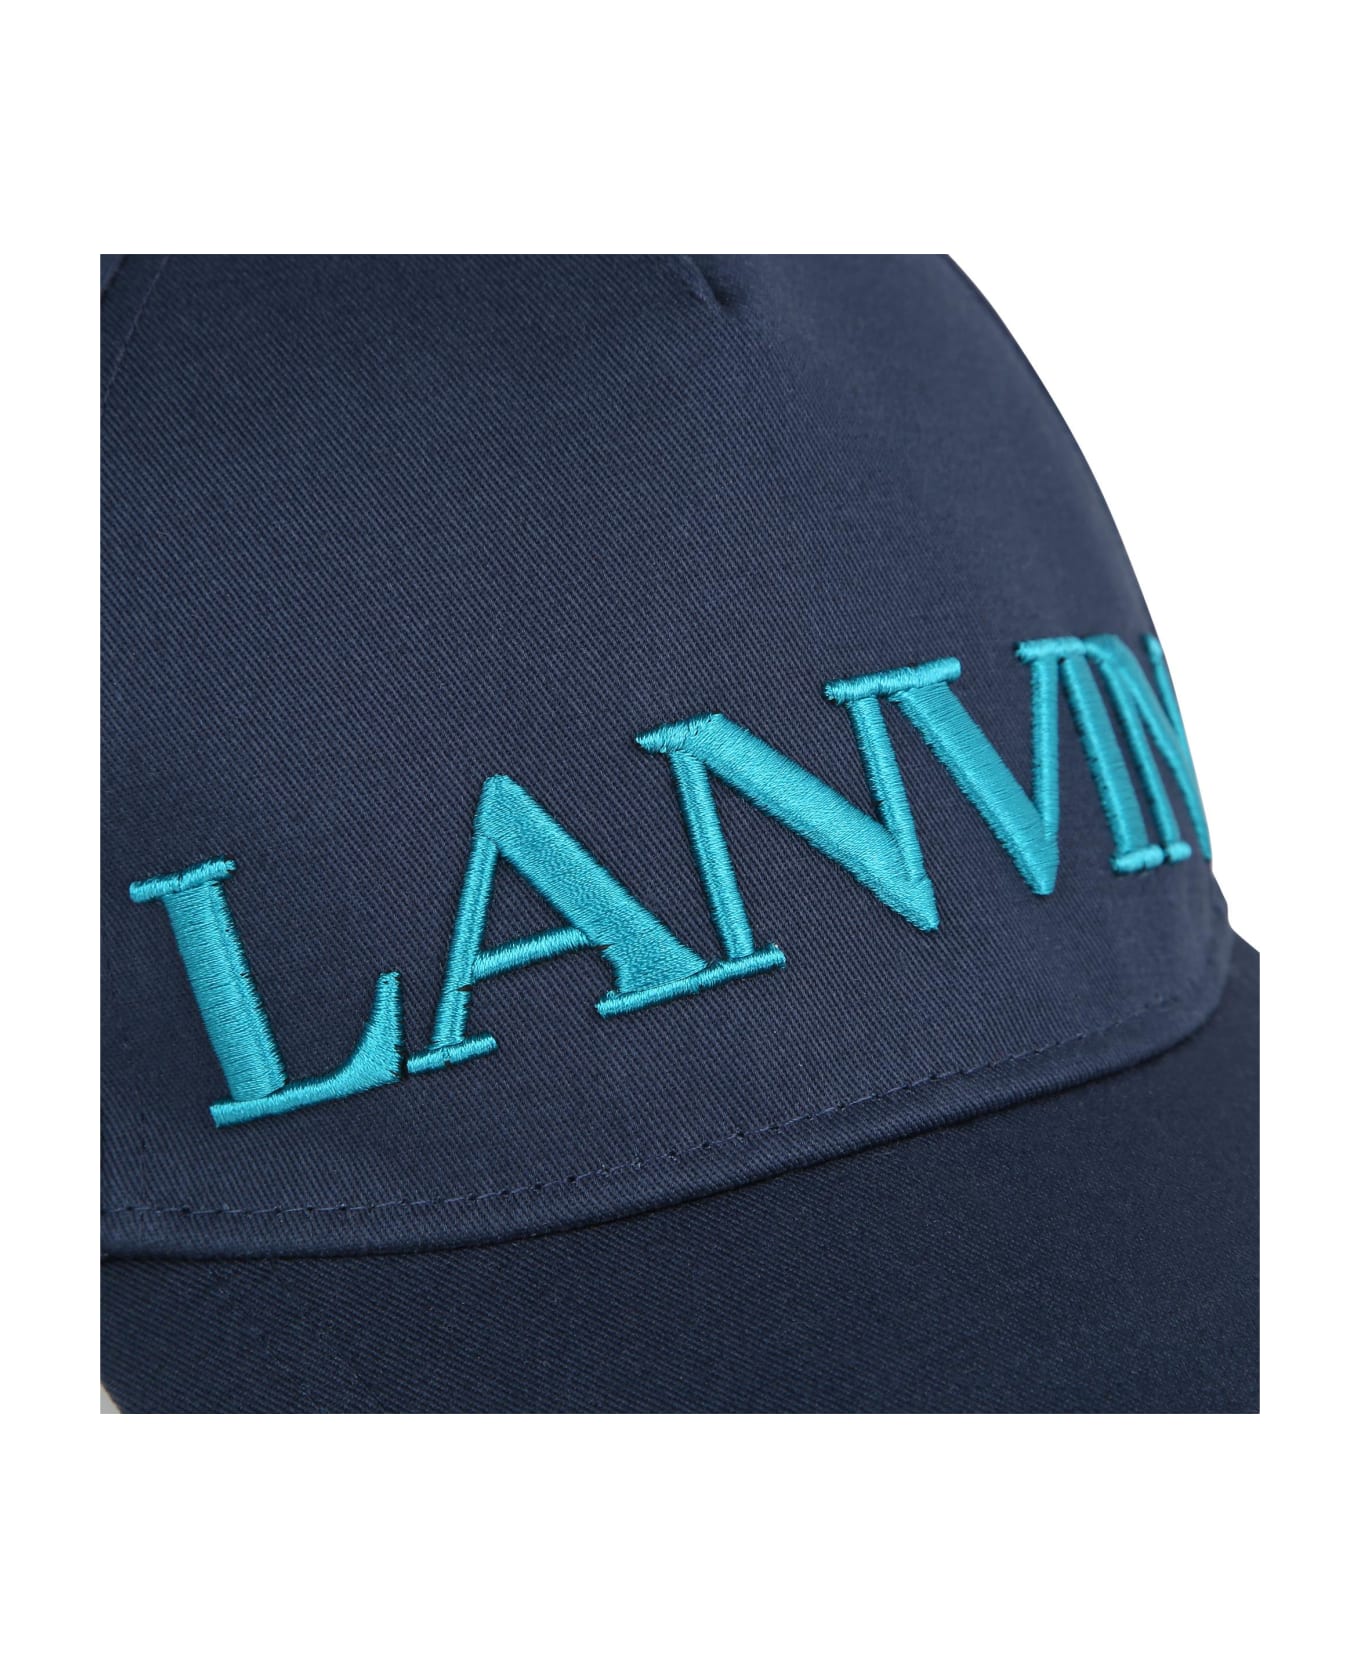 Lanvin Cappello Con Logo - Blue アクセサリー＆ギフト